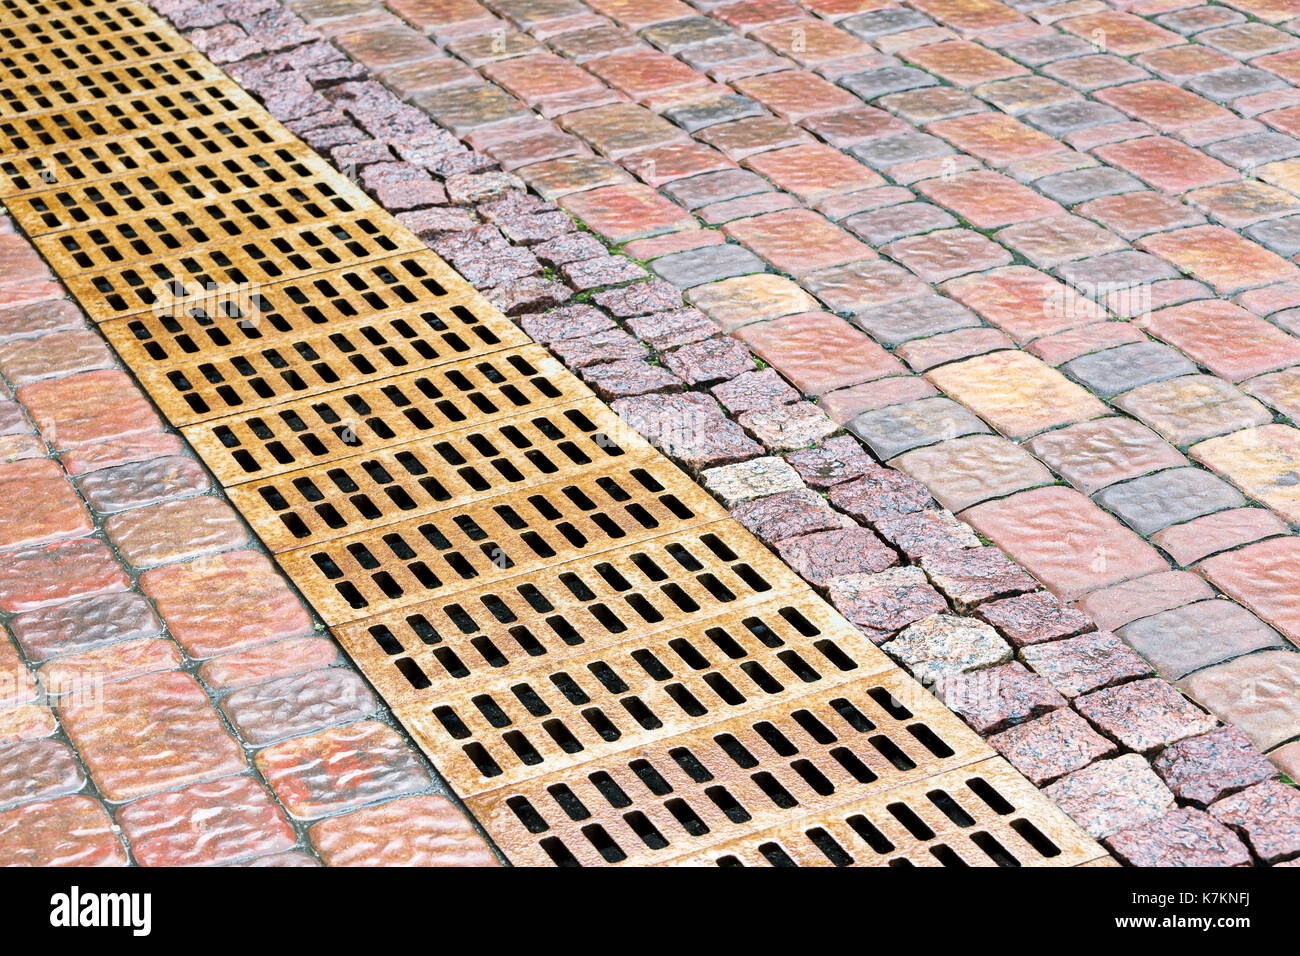 rusty-metal-sewer-grate-for-drainage-system-on-wet-cobblestone-sidewalk-K7KNFJ.jpg